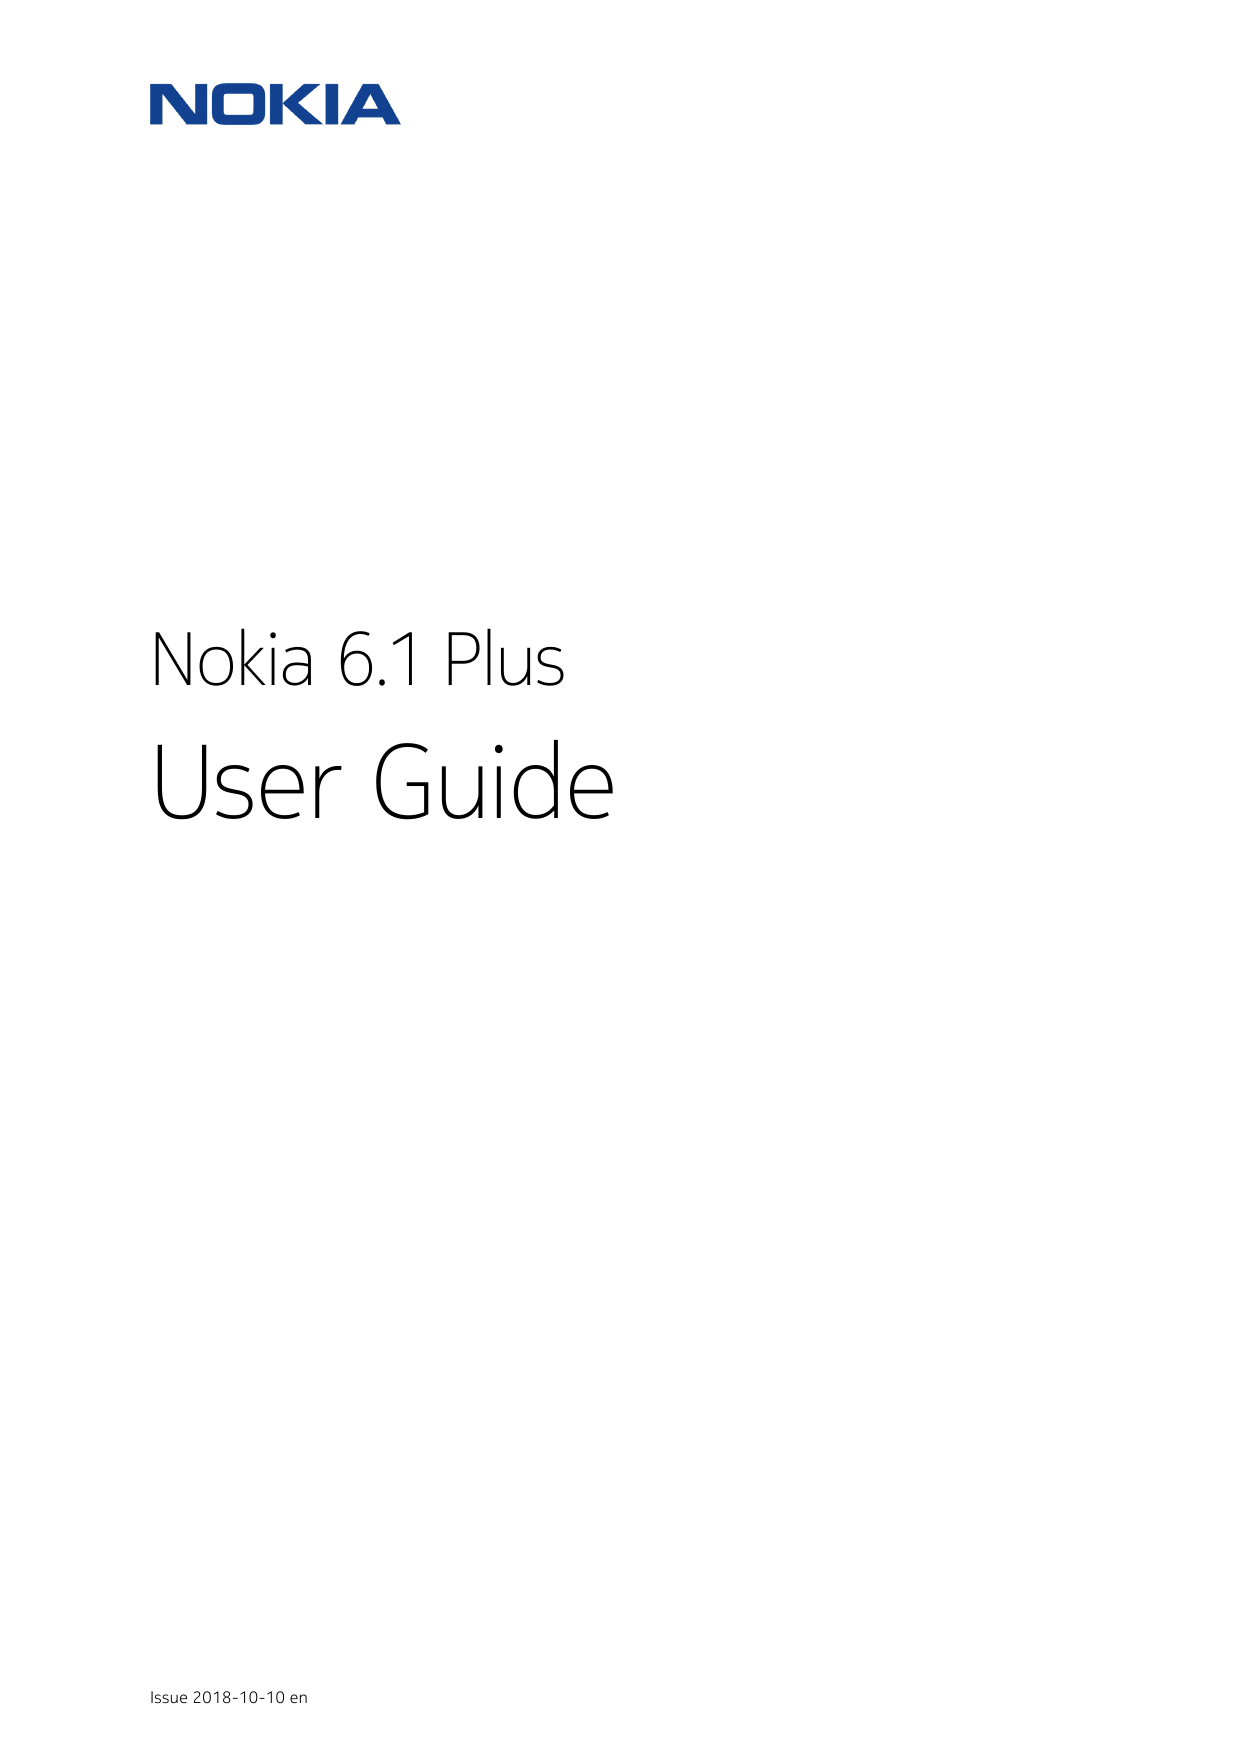 Nokia 6.1 PlusUser GuideIssue 2018-10-10 en